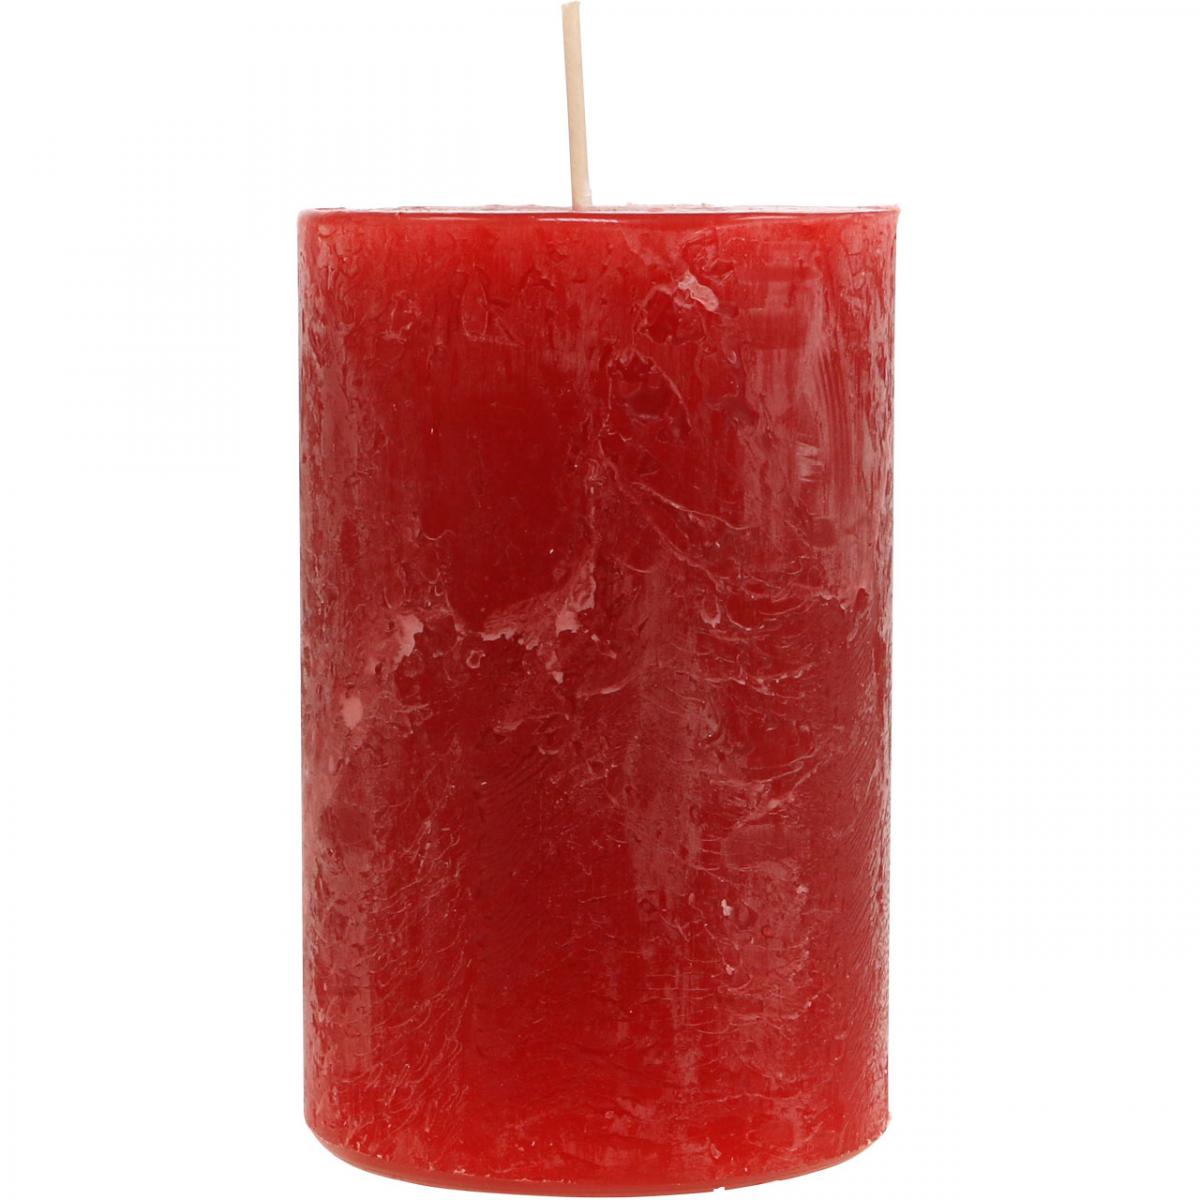 Candele a colonna rosse Candele dell'Avvento candele rosse  200/50mm 24 pezzi-618198-001